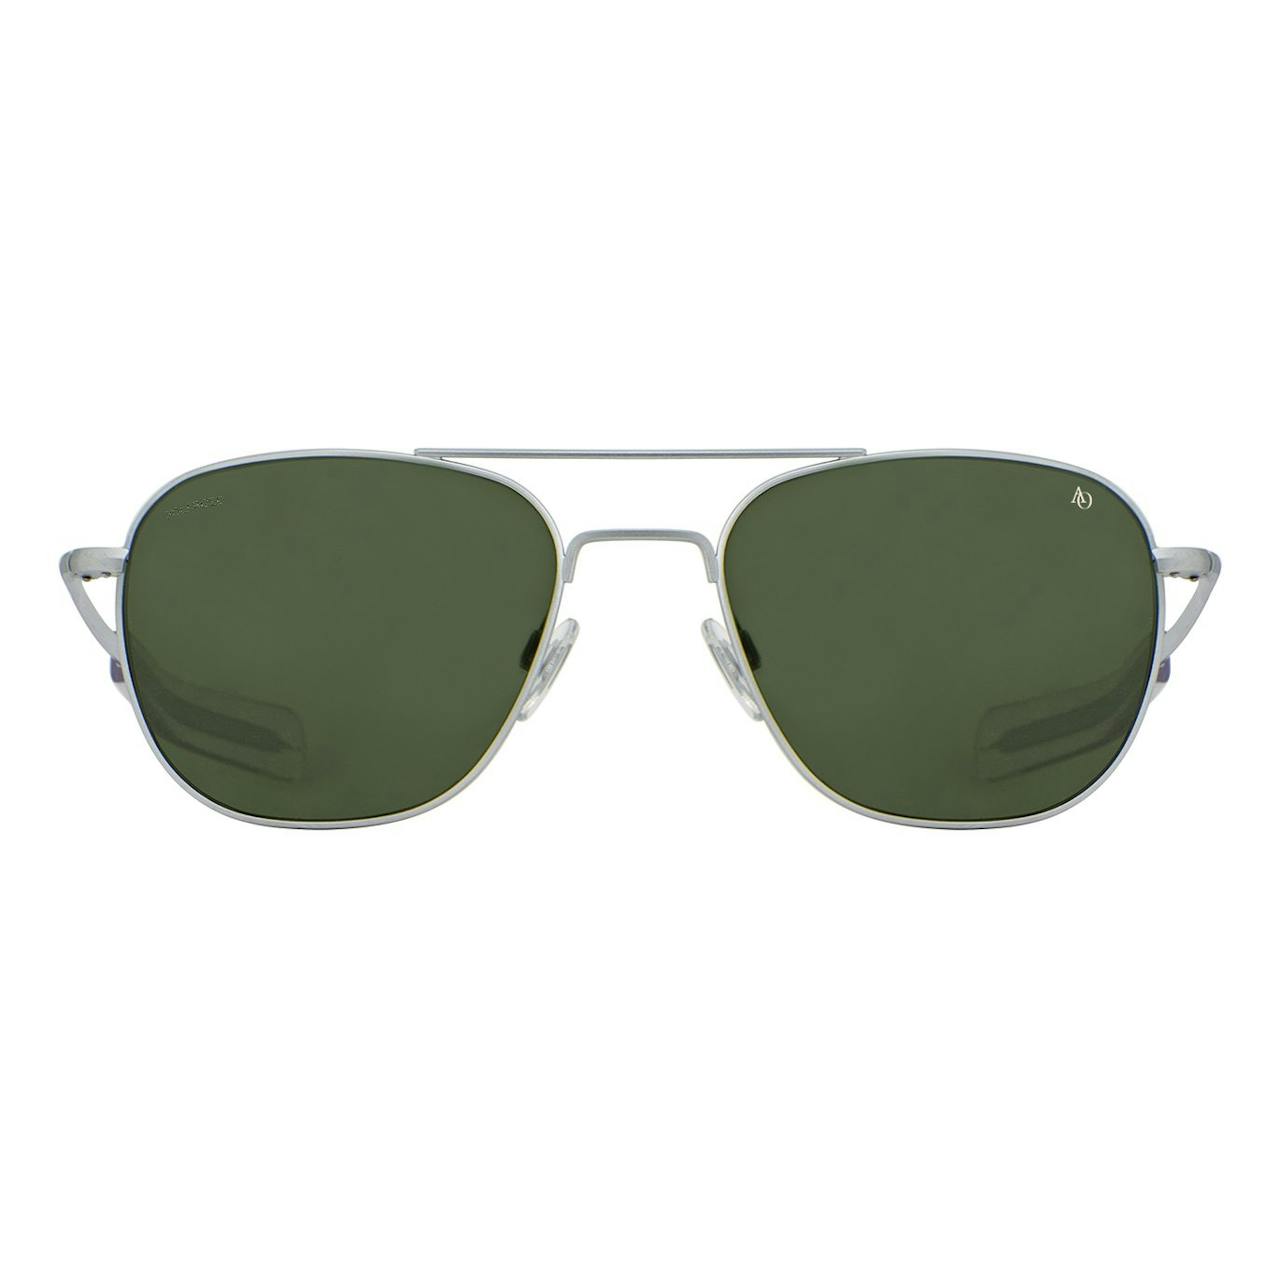 American Optical Original Pilot - Green Silver/Polarized Sunglasses Huckberry Nylon Matte | 